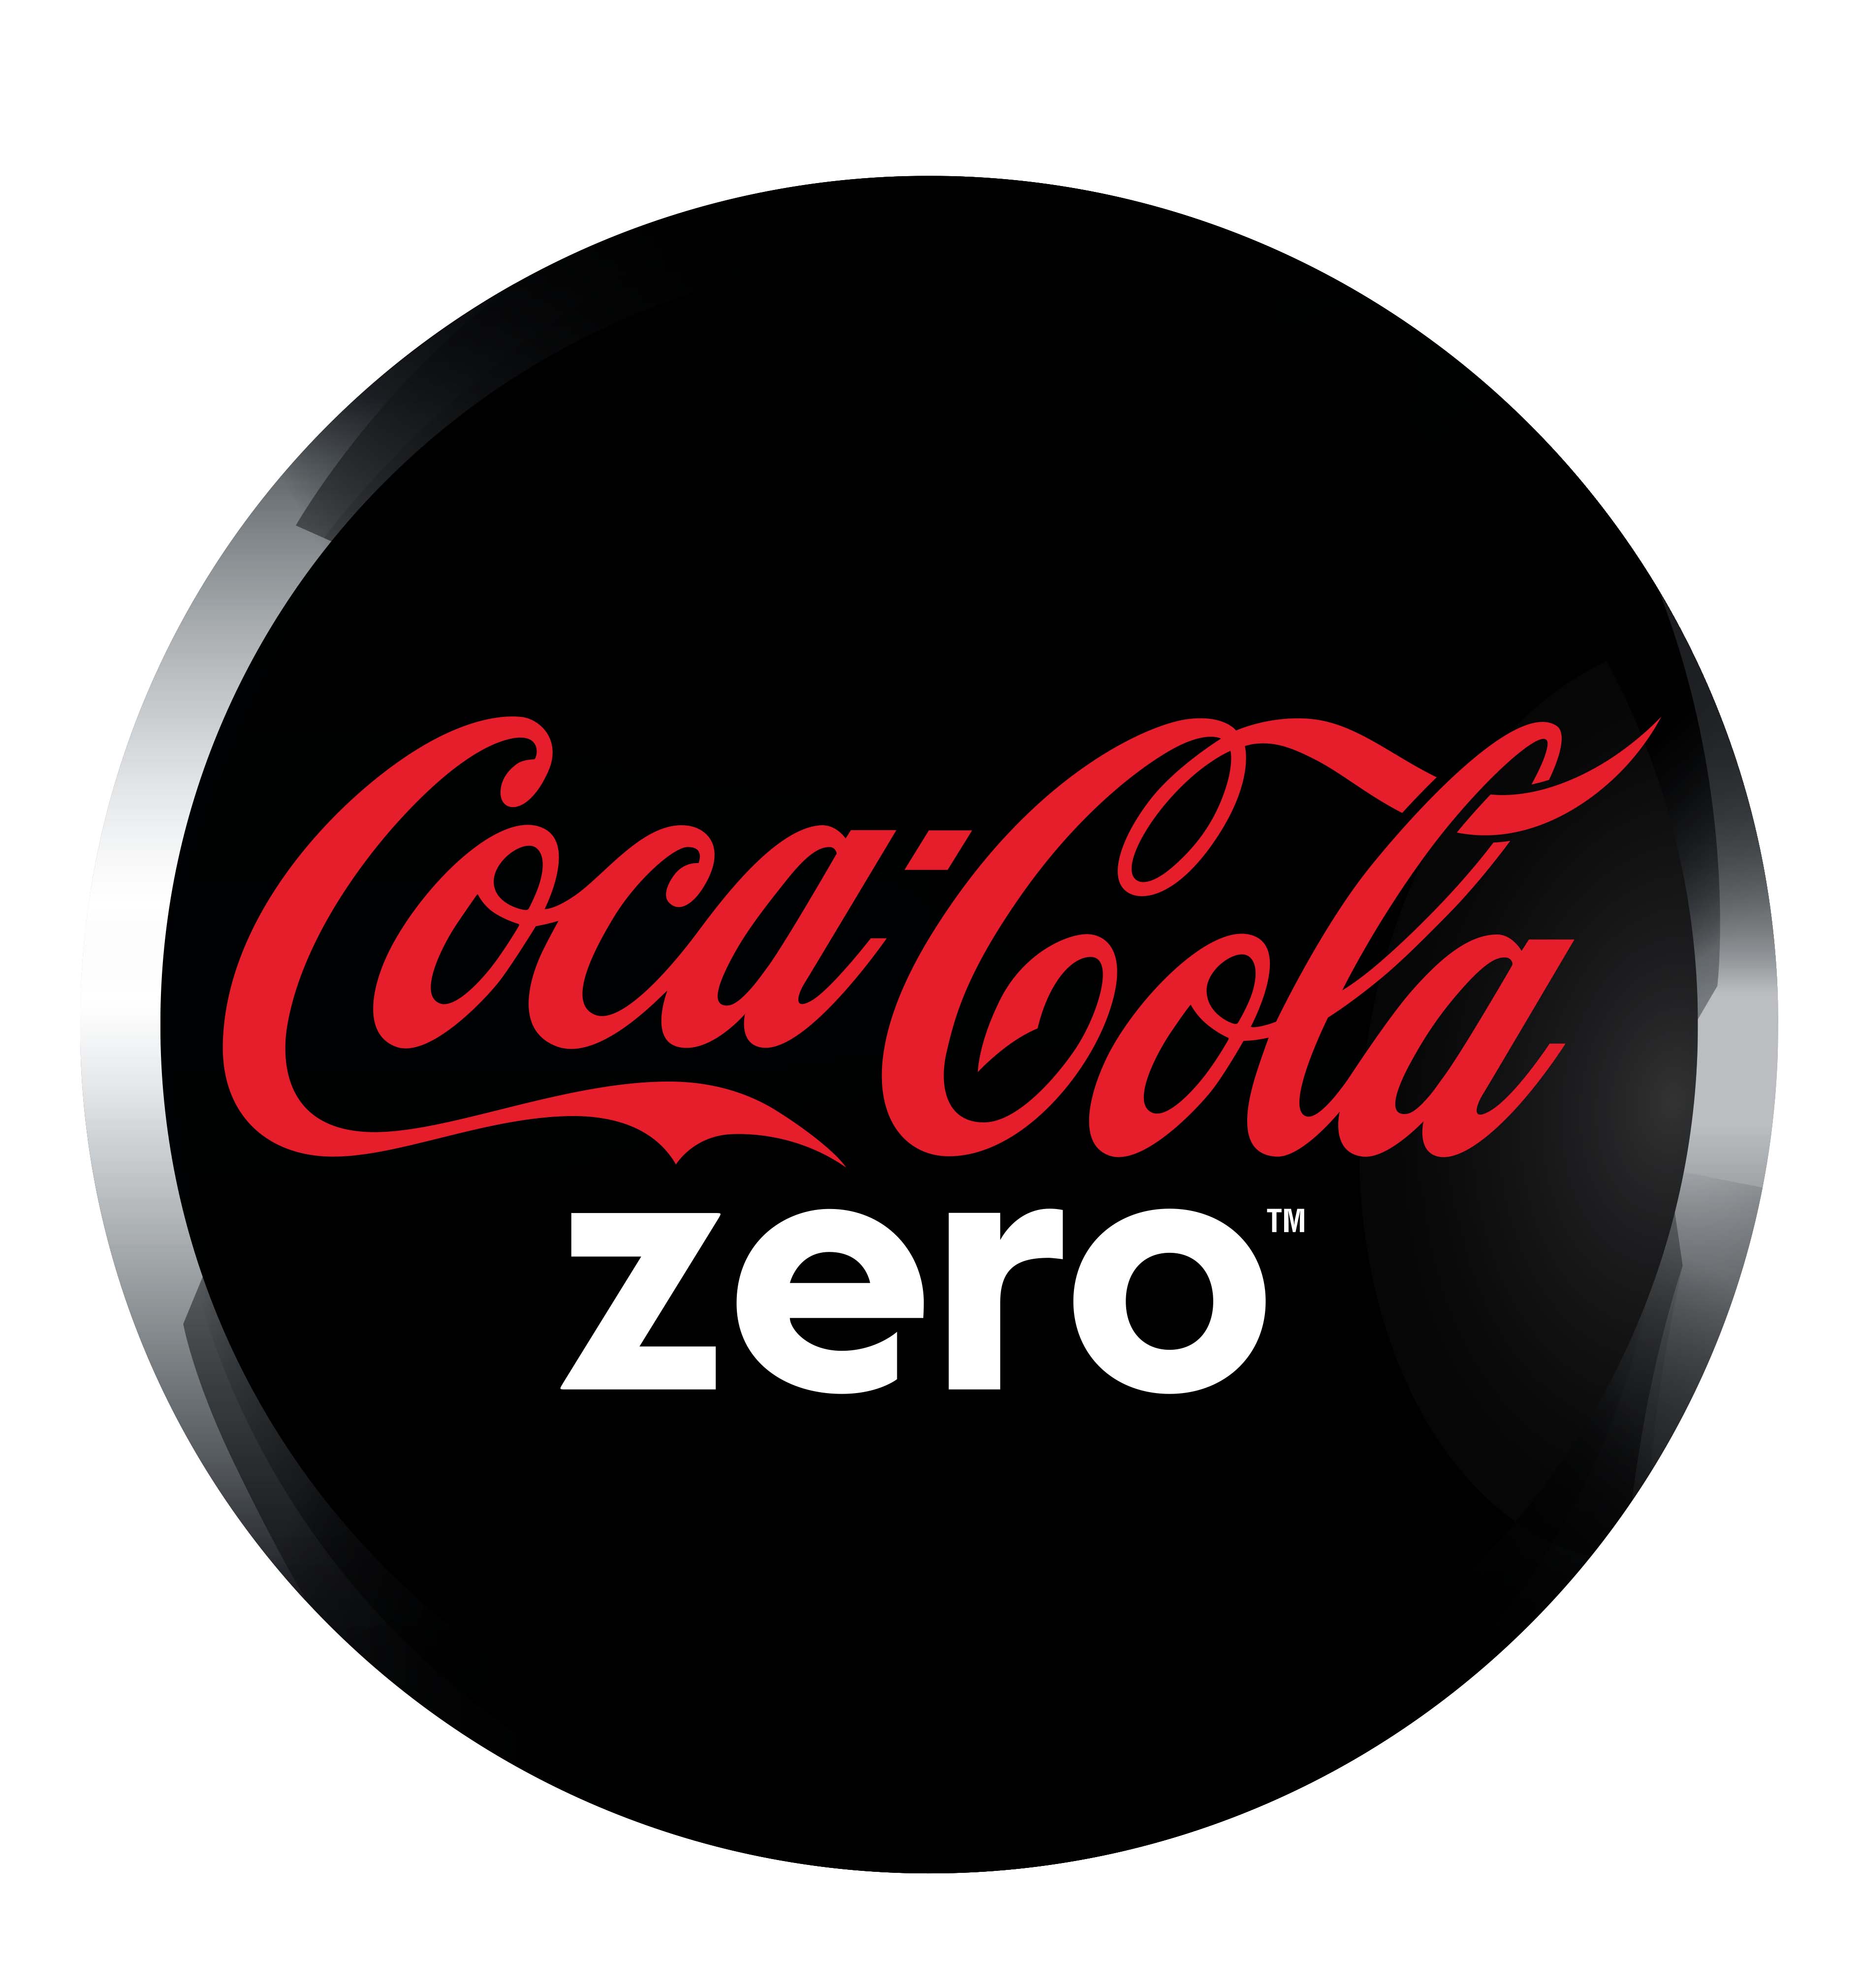 Coca-Cola Zero Logo - Image - Logo-coca-cola-zero.jpg | Logopedia | FANDOM powered by Wikia